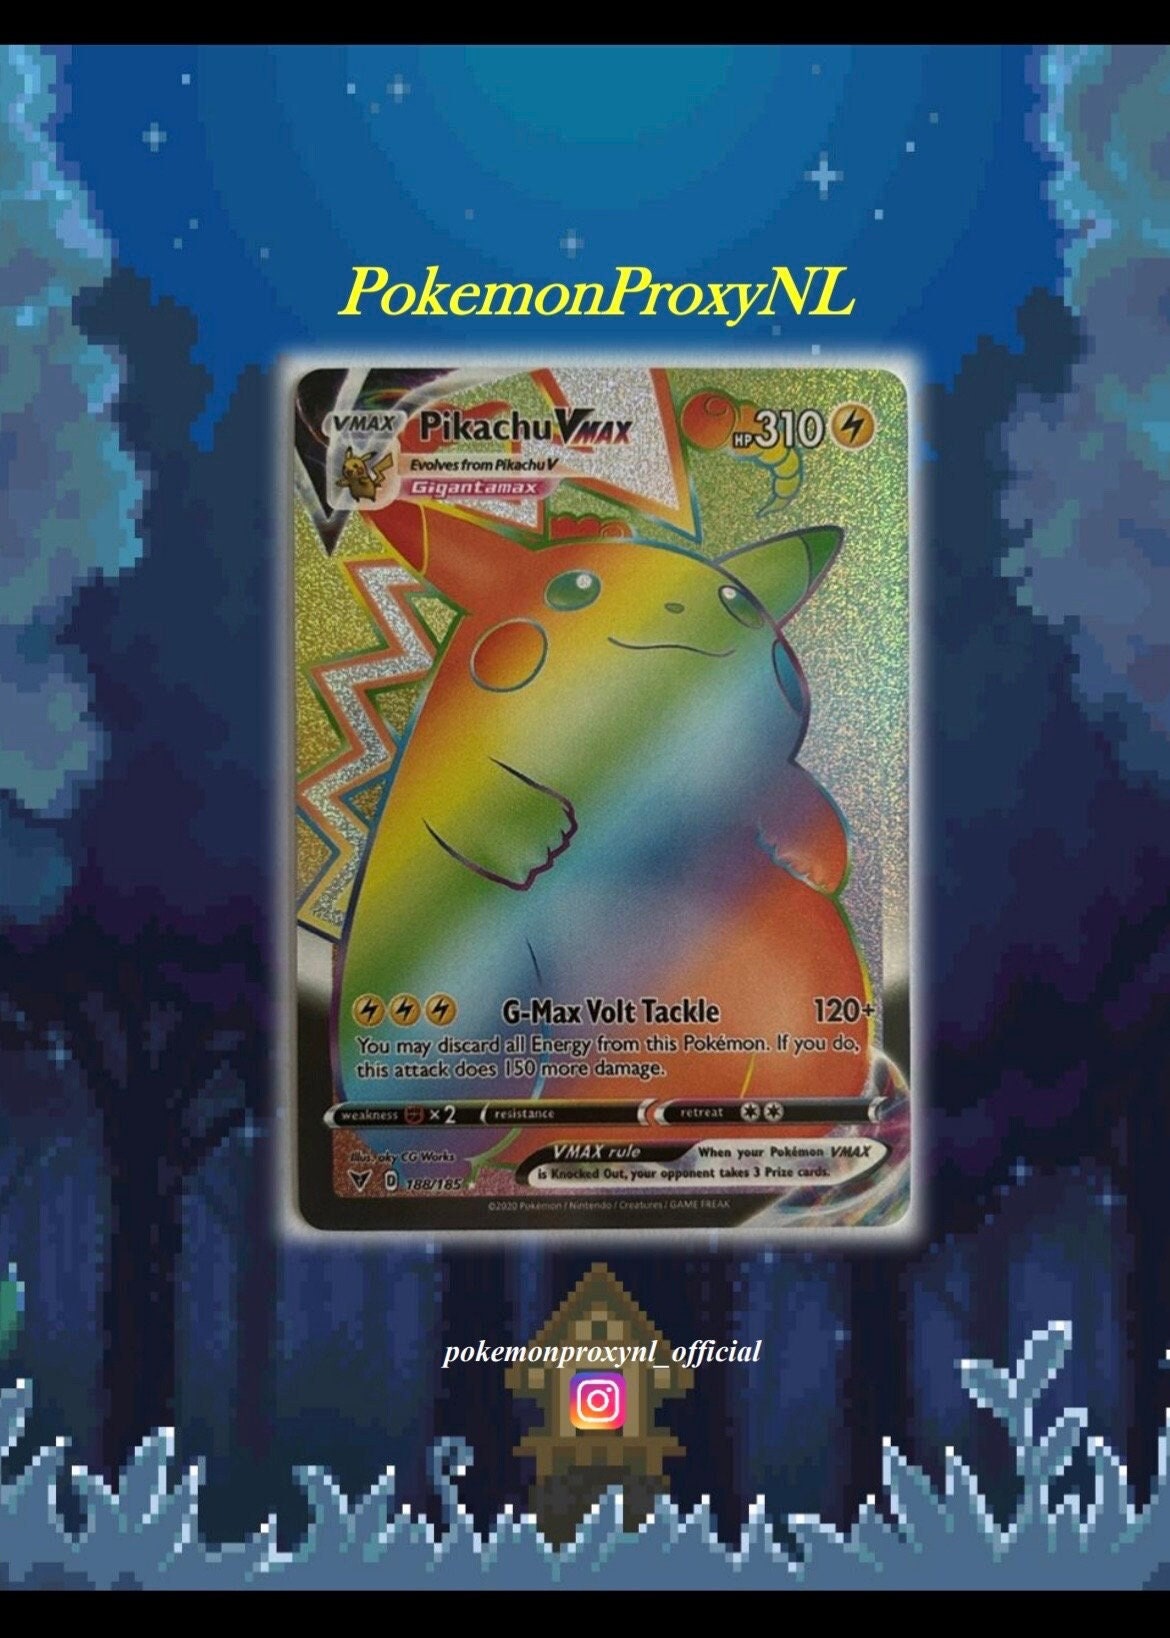 Metal Rainbow Glitter Collectibles, Rainbow Pokemon Cards